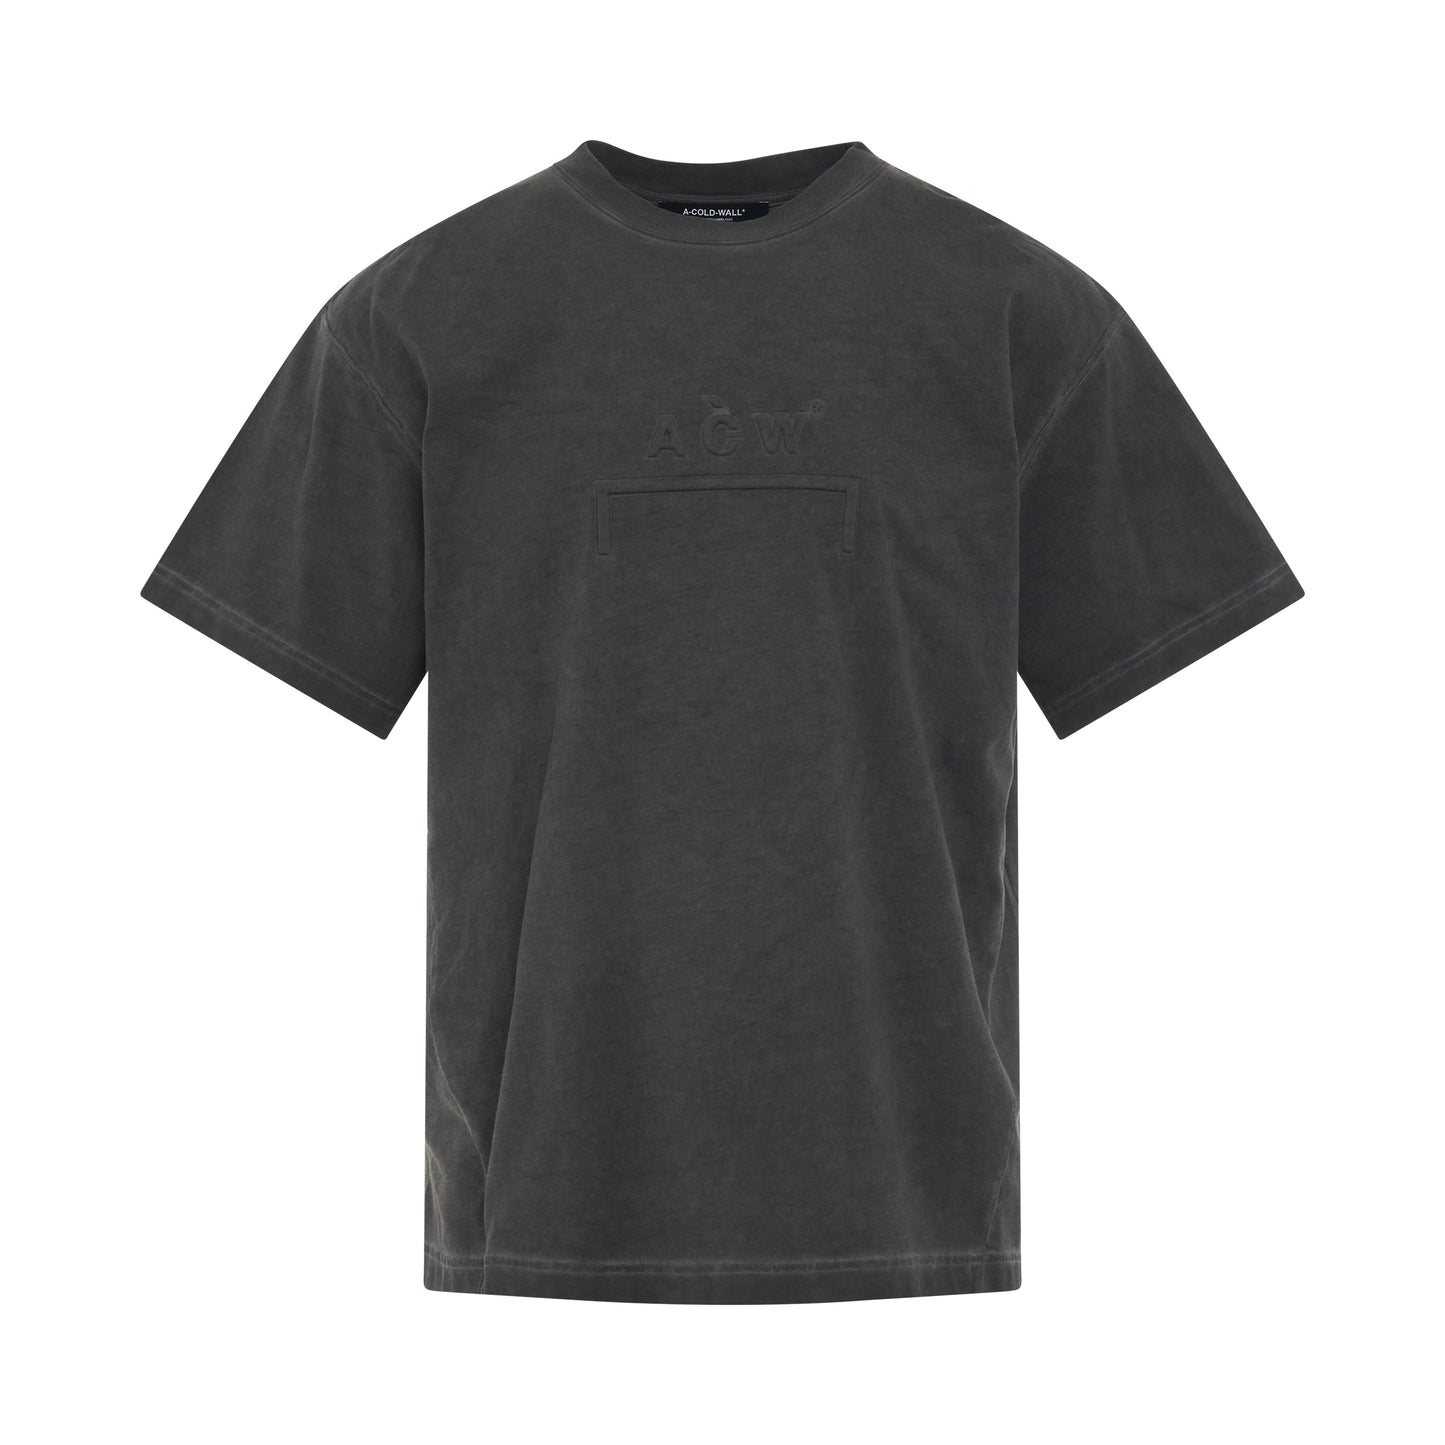 Dissolve Dye T-Shirt in Black